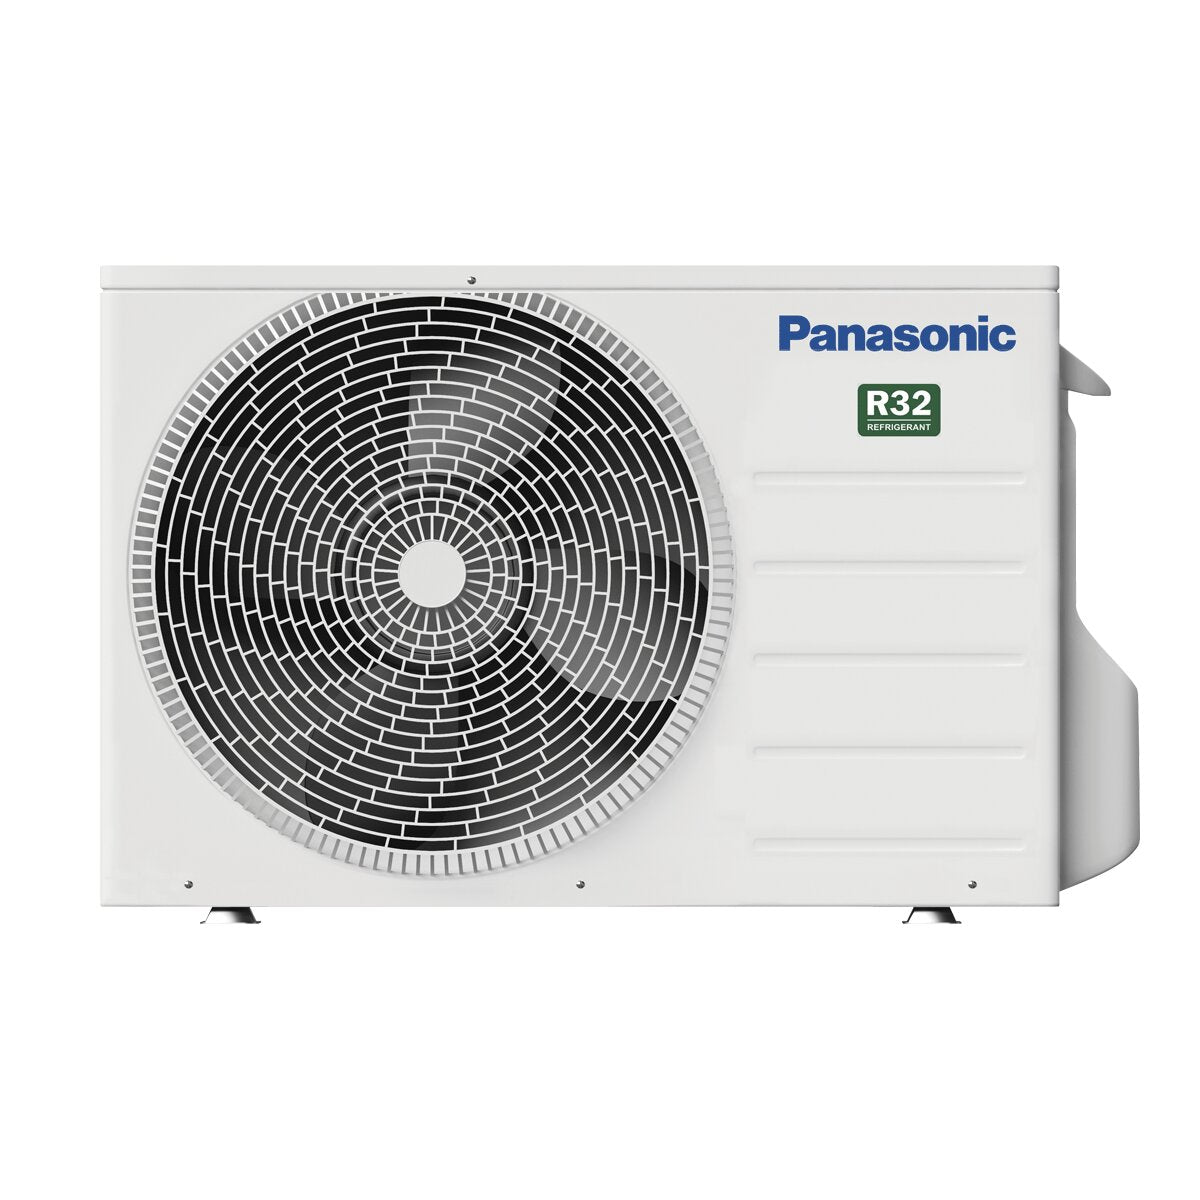 Panasonic Air Conditioner BZ Series 9000 BTU R32 Inverter A++/A+